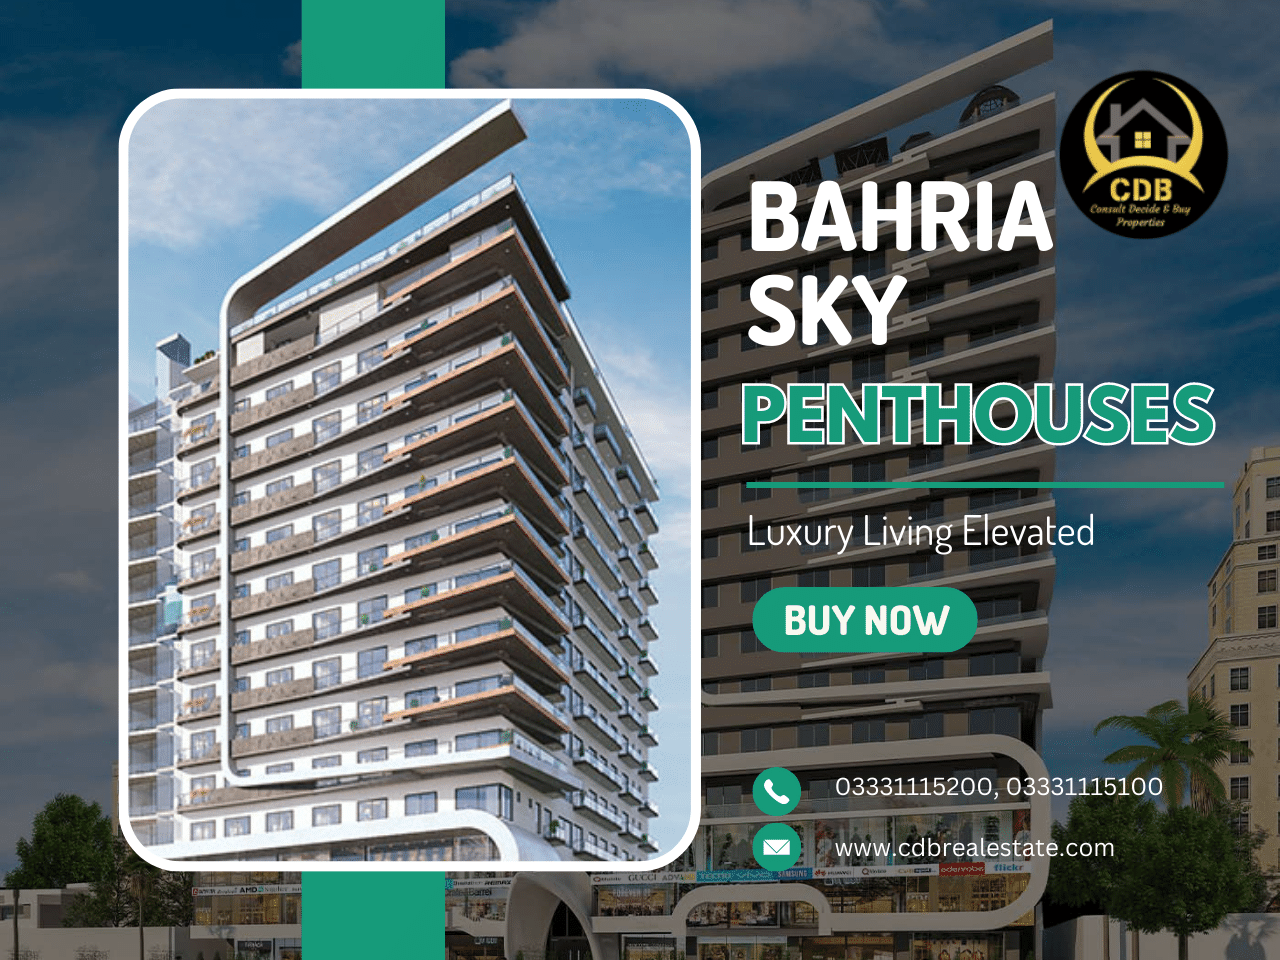 Bahria Sky Penthouses